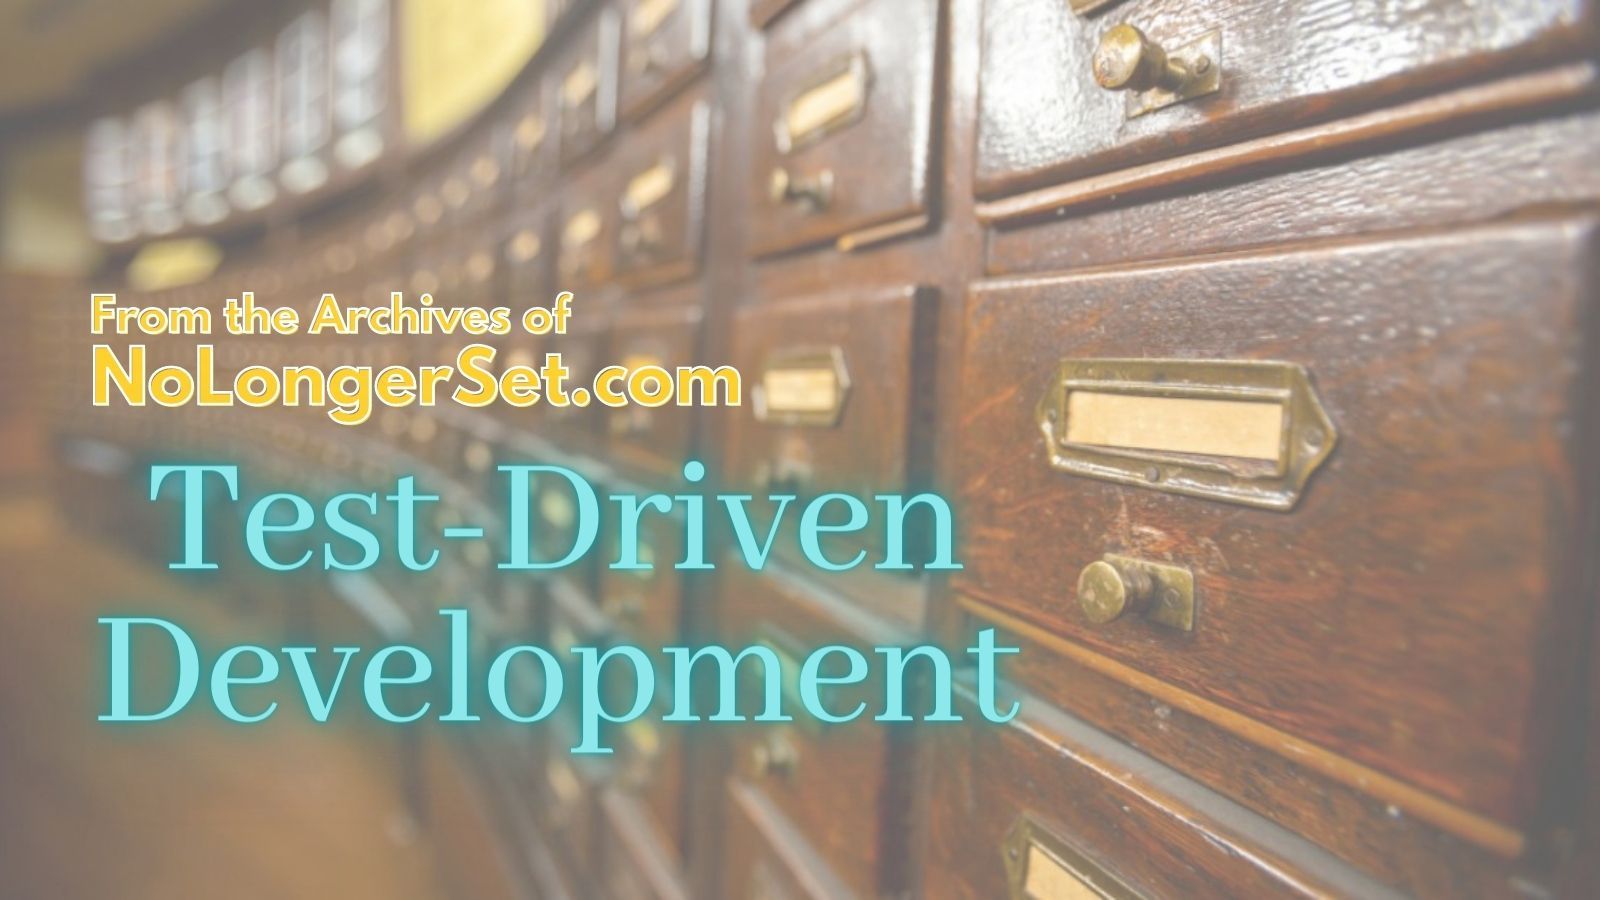 Archive Collection: Test-Driven Development